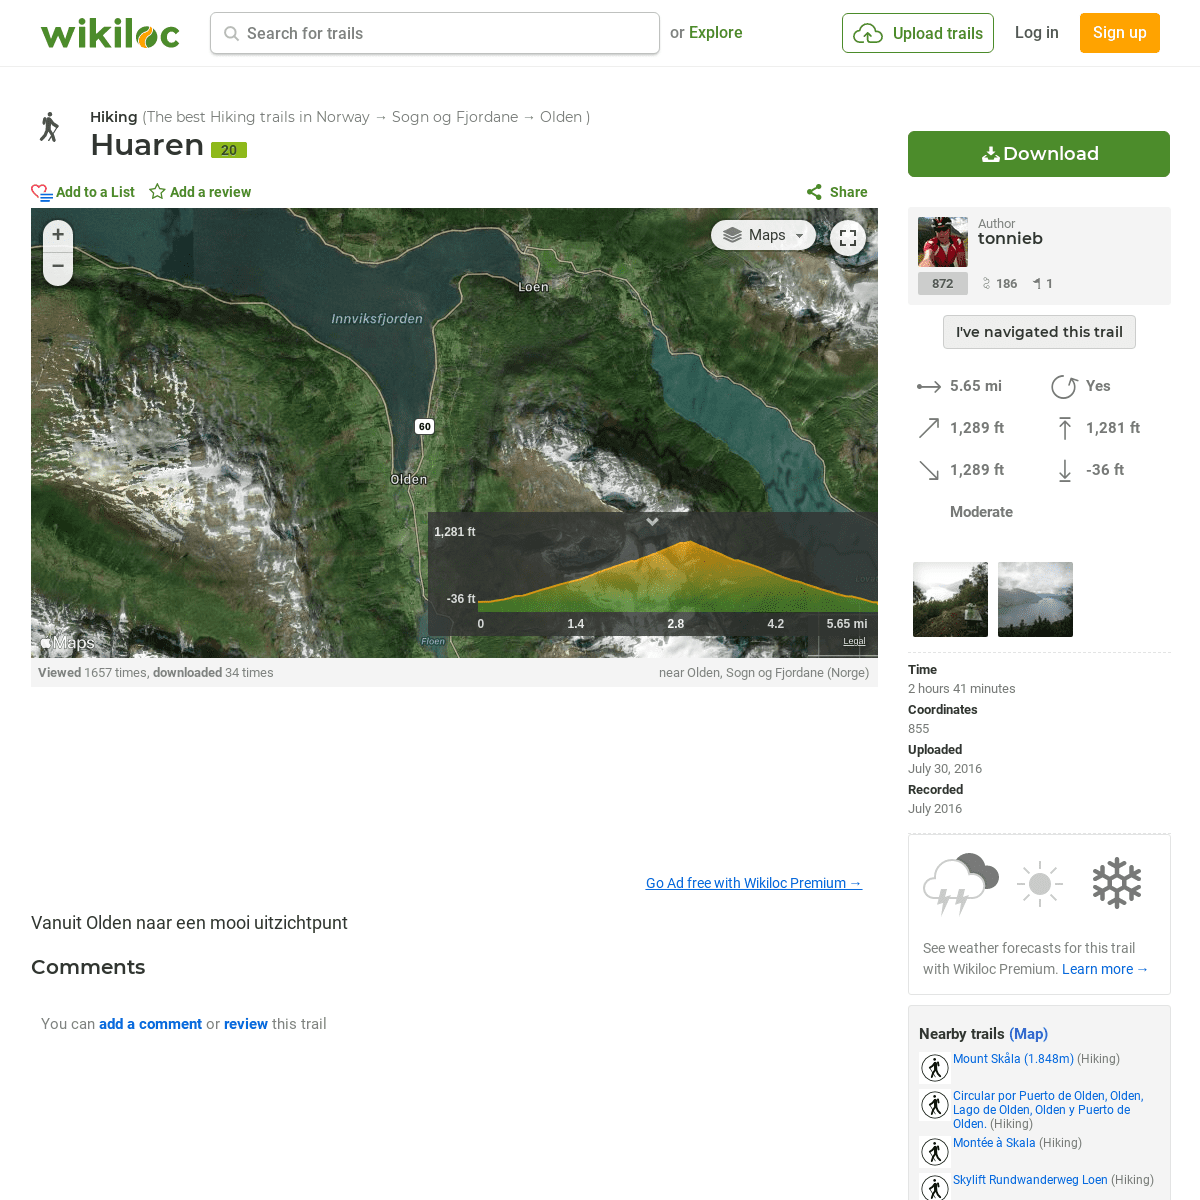 A complete backup of https://www.wikiloc.com/hiking-trails/huaren-14170698